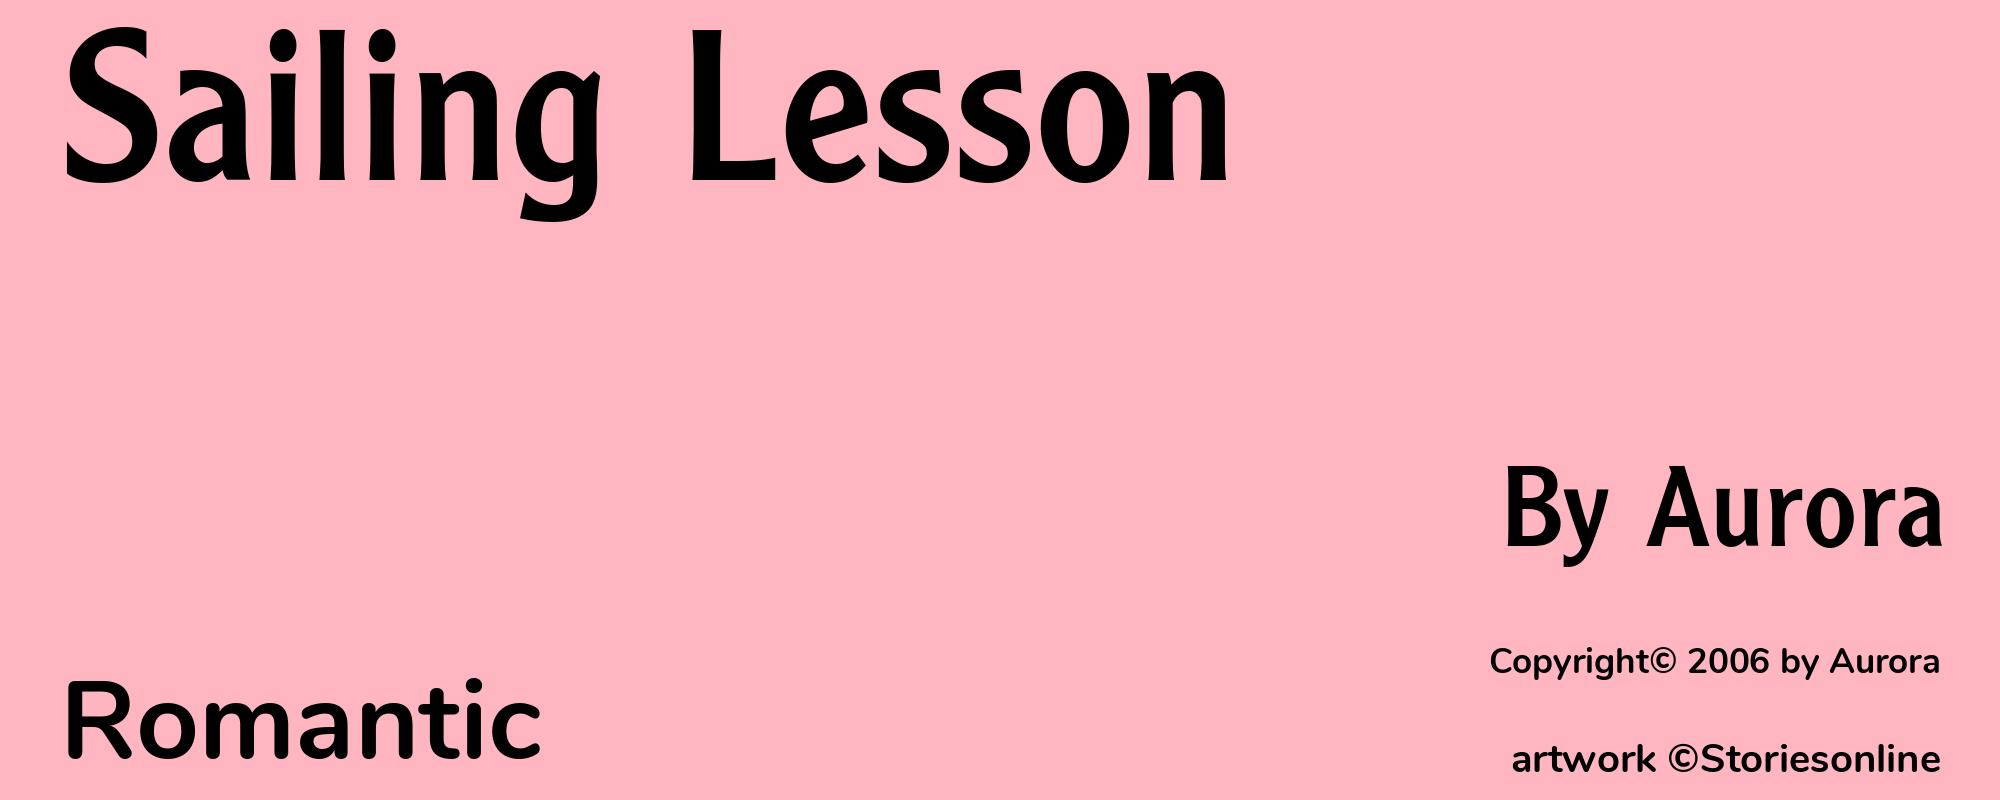 Sailing Lesson - Cover